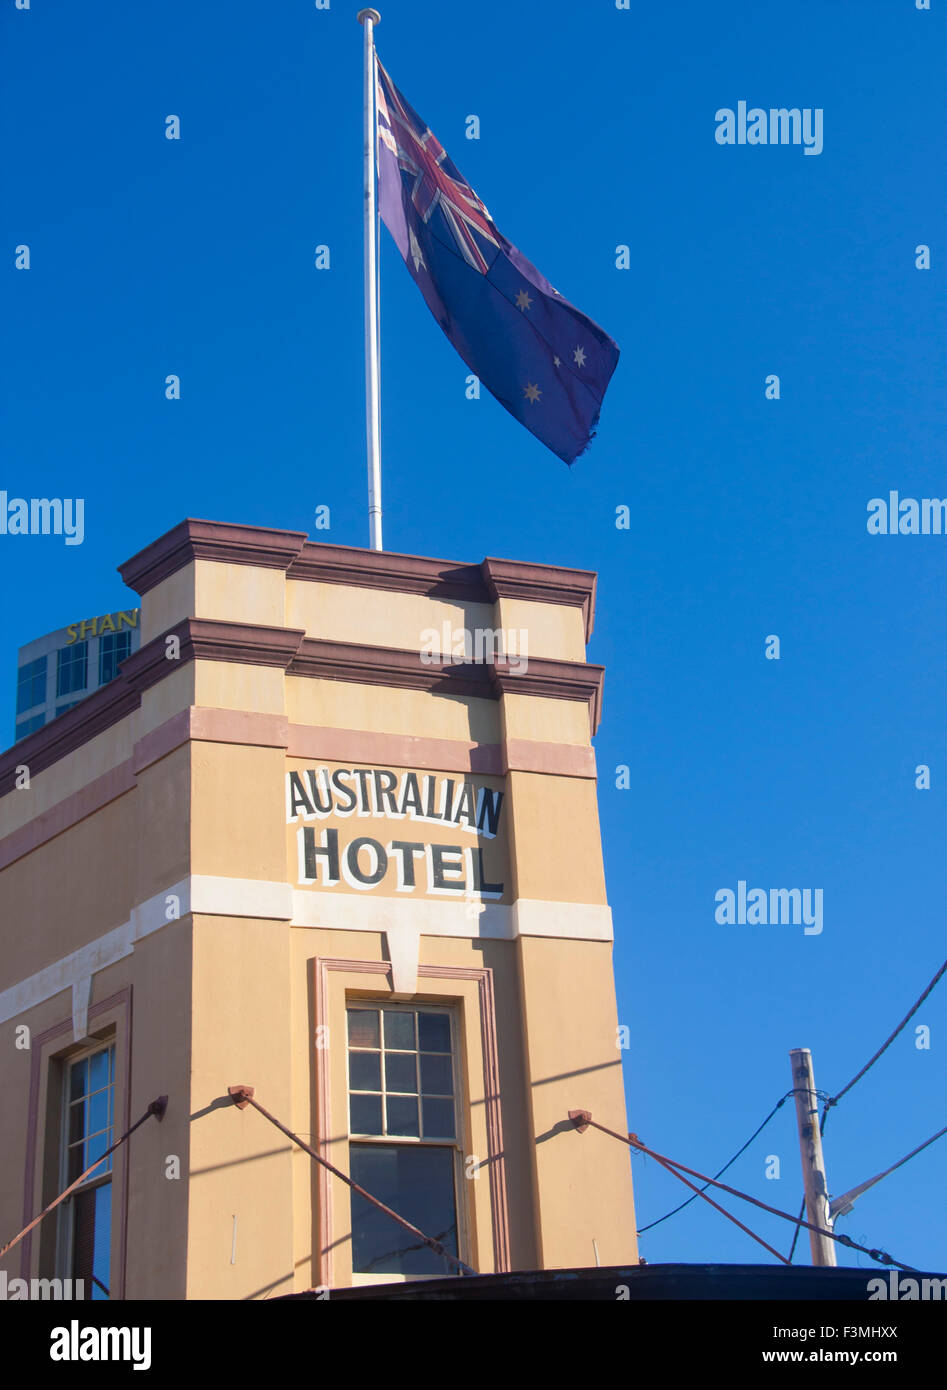 Australien Hotel Felsen Sydney New South Wales NSW Australia Stockfoto